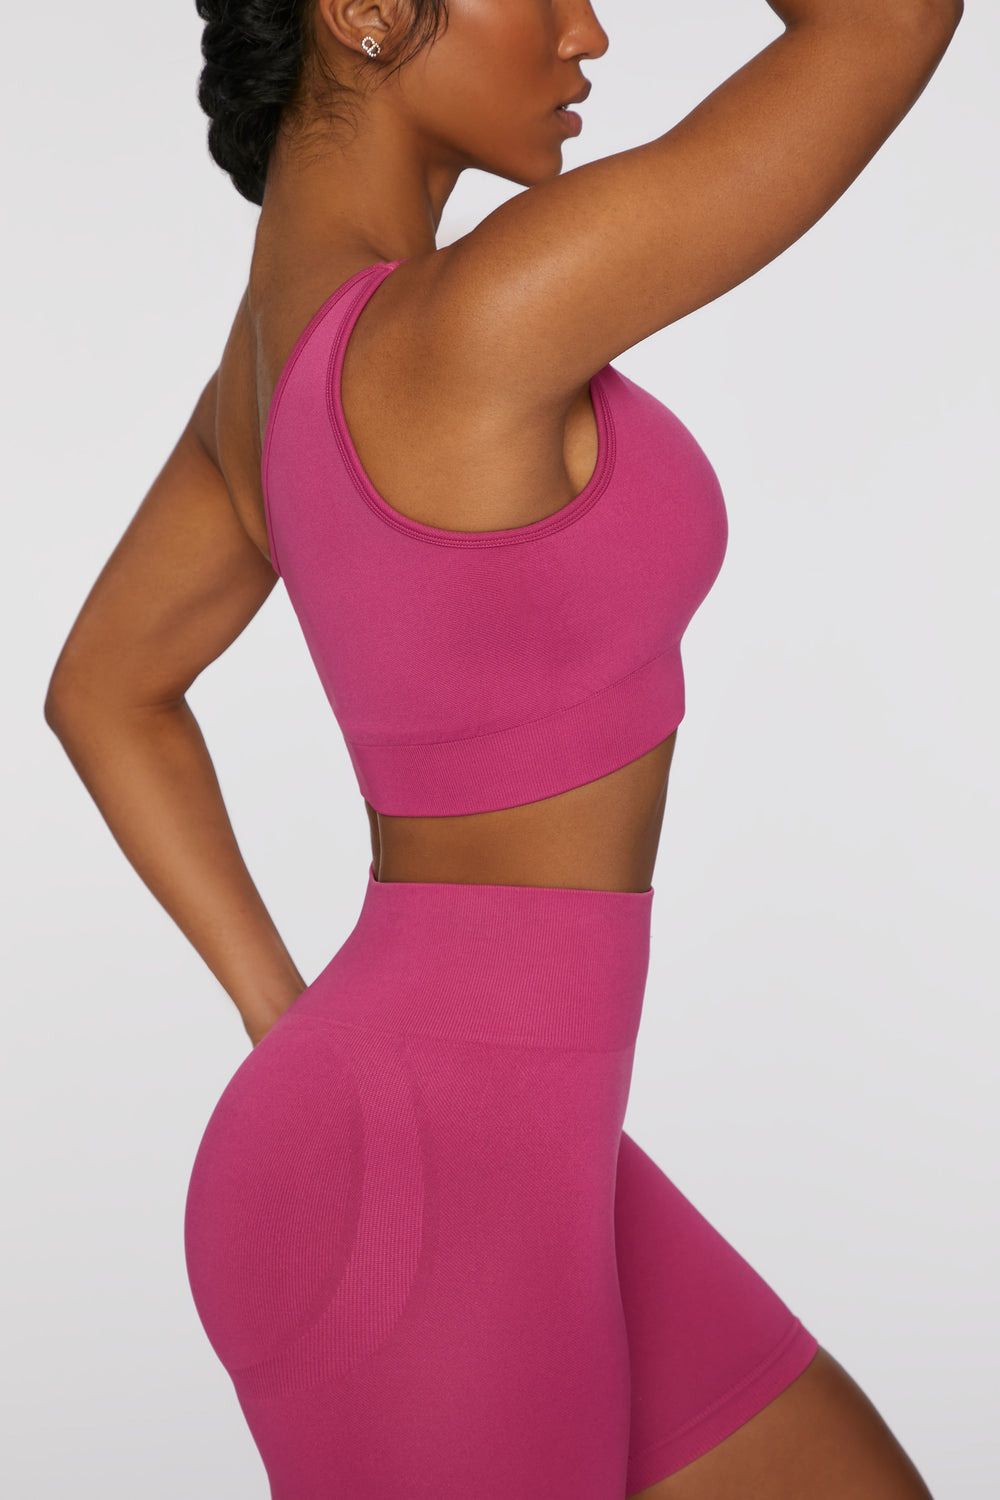 Bo+Tee Agile Long Sleeve High Neck Zip Crop Top Women Medium Dark Pink NWT